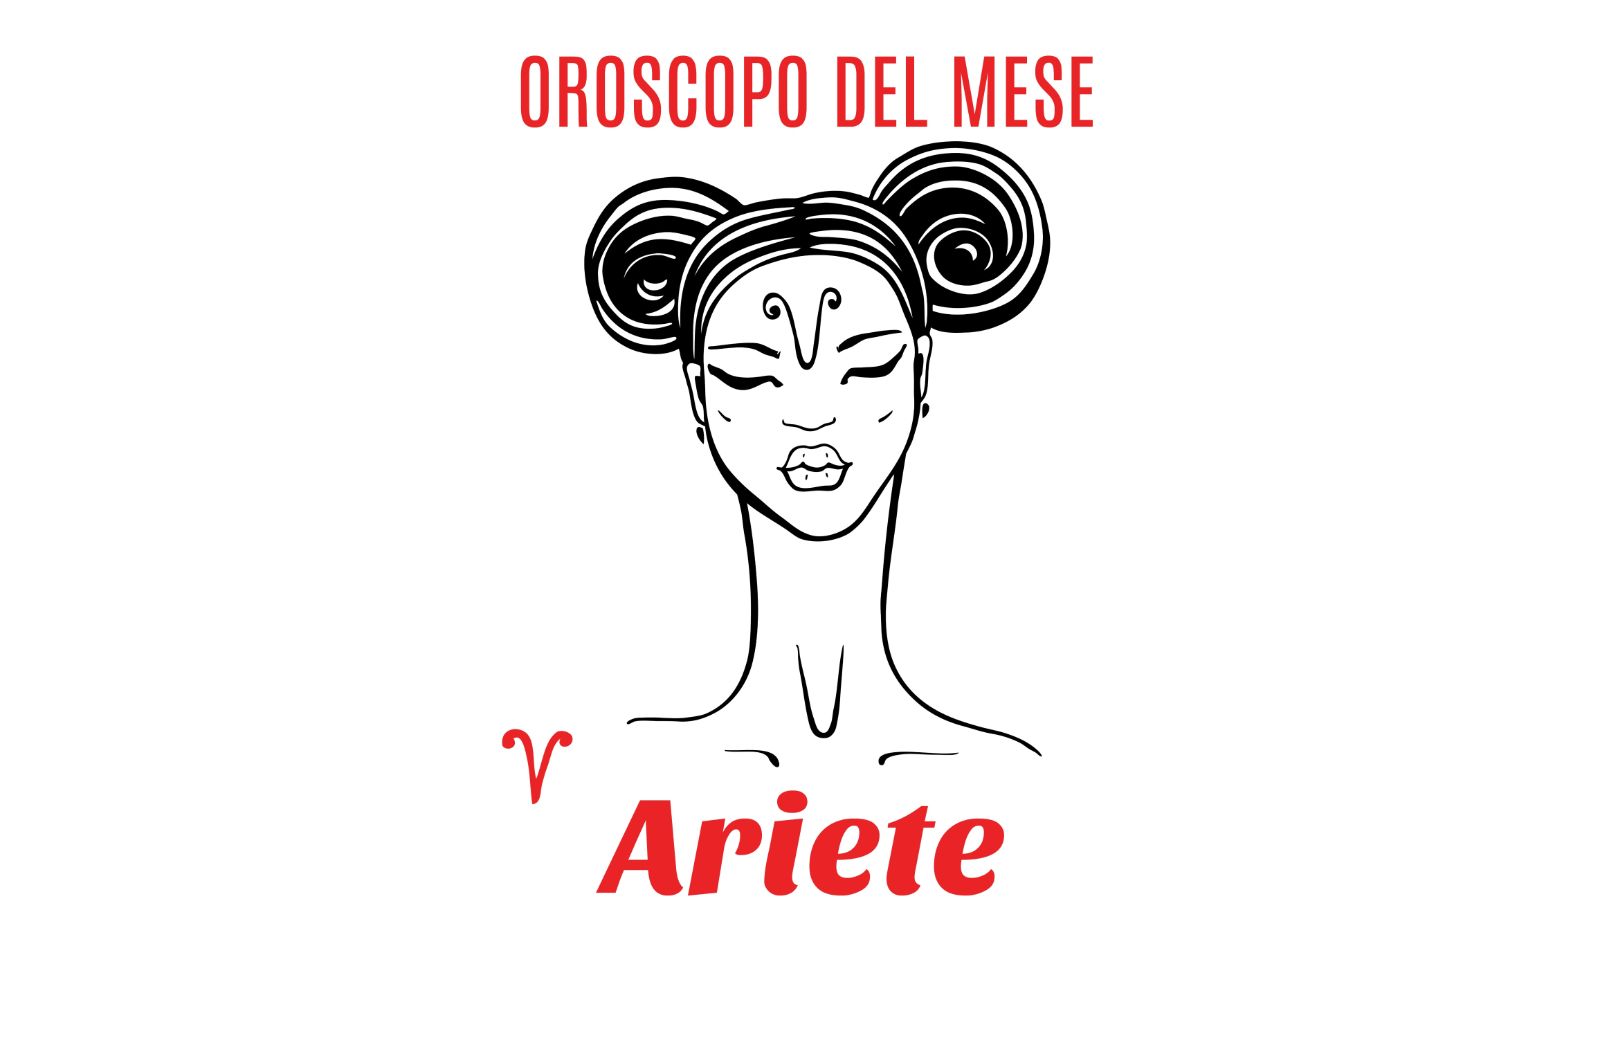 Oroscopo del mese: Ariete - ottobre 2020